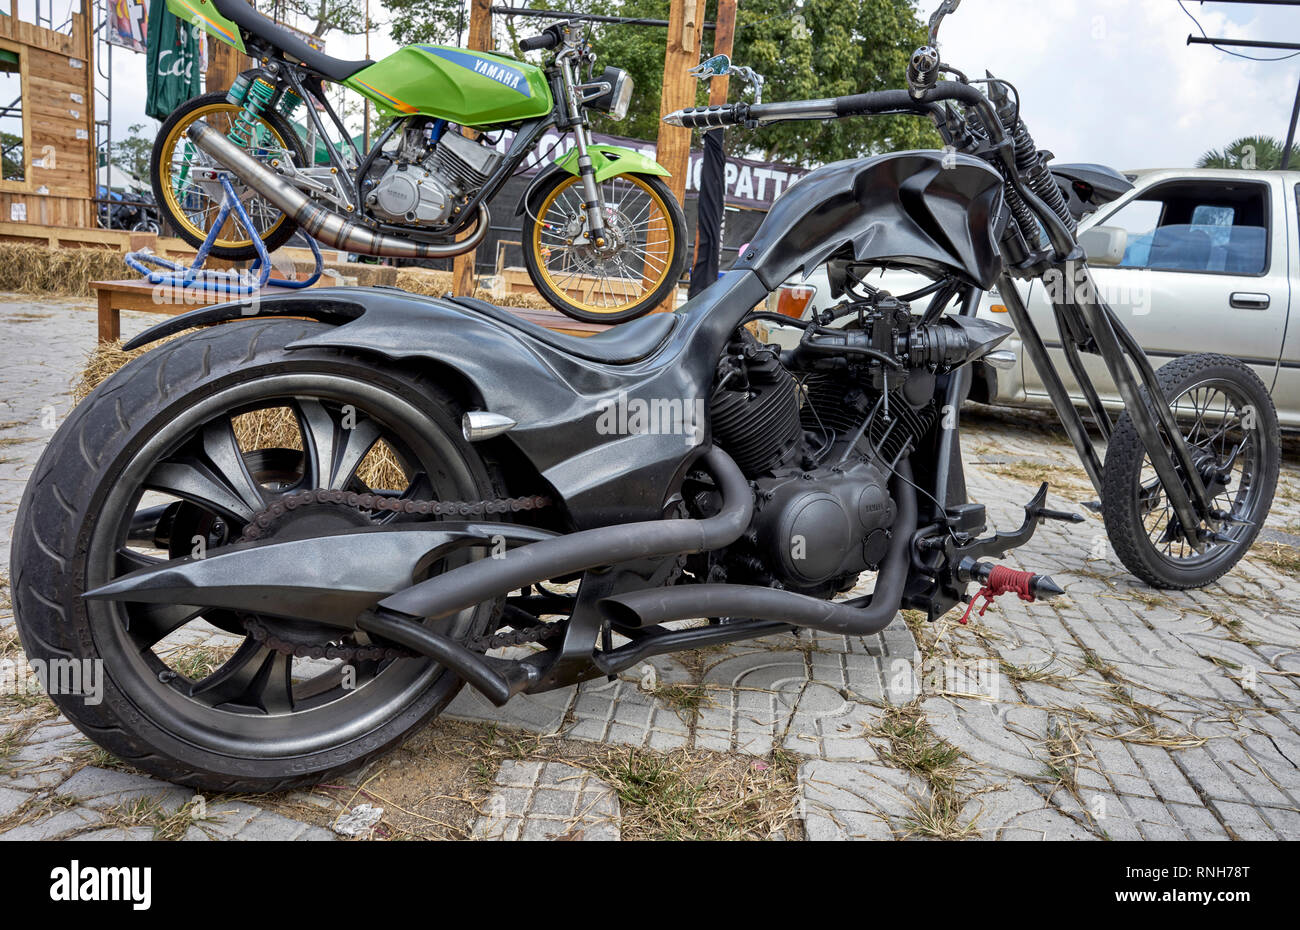 Chopper moto. Modificación extrema de una motocicleta Yamaha Foto de stock